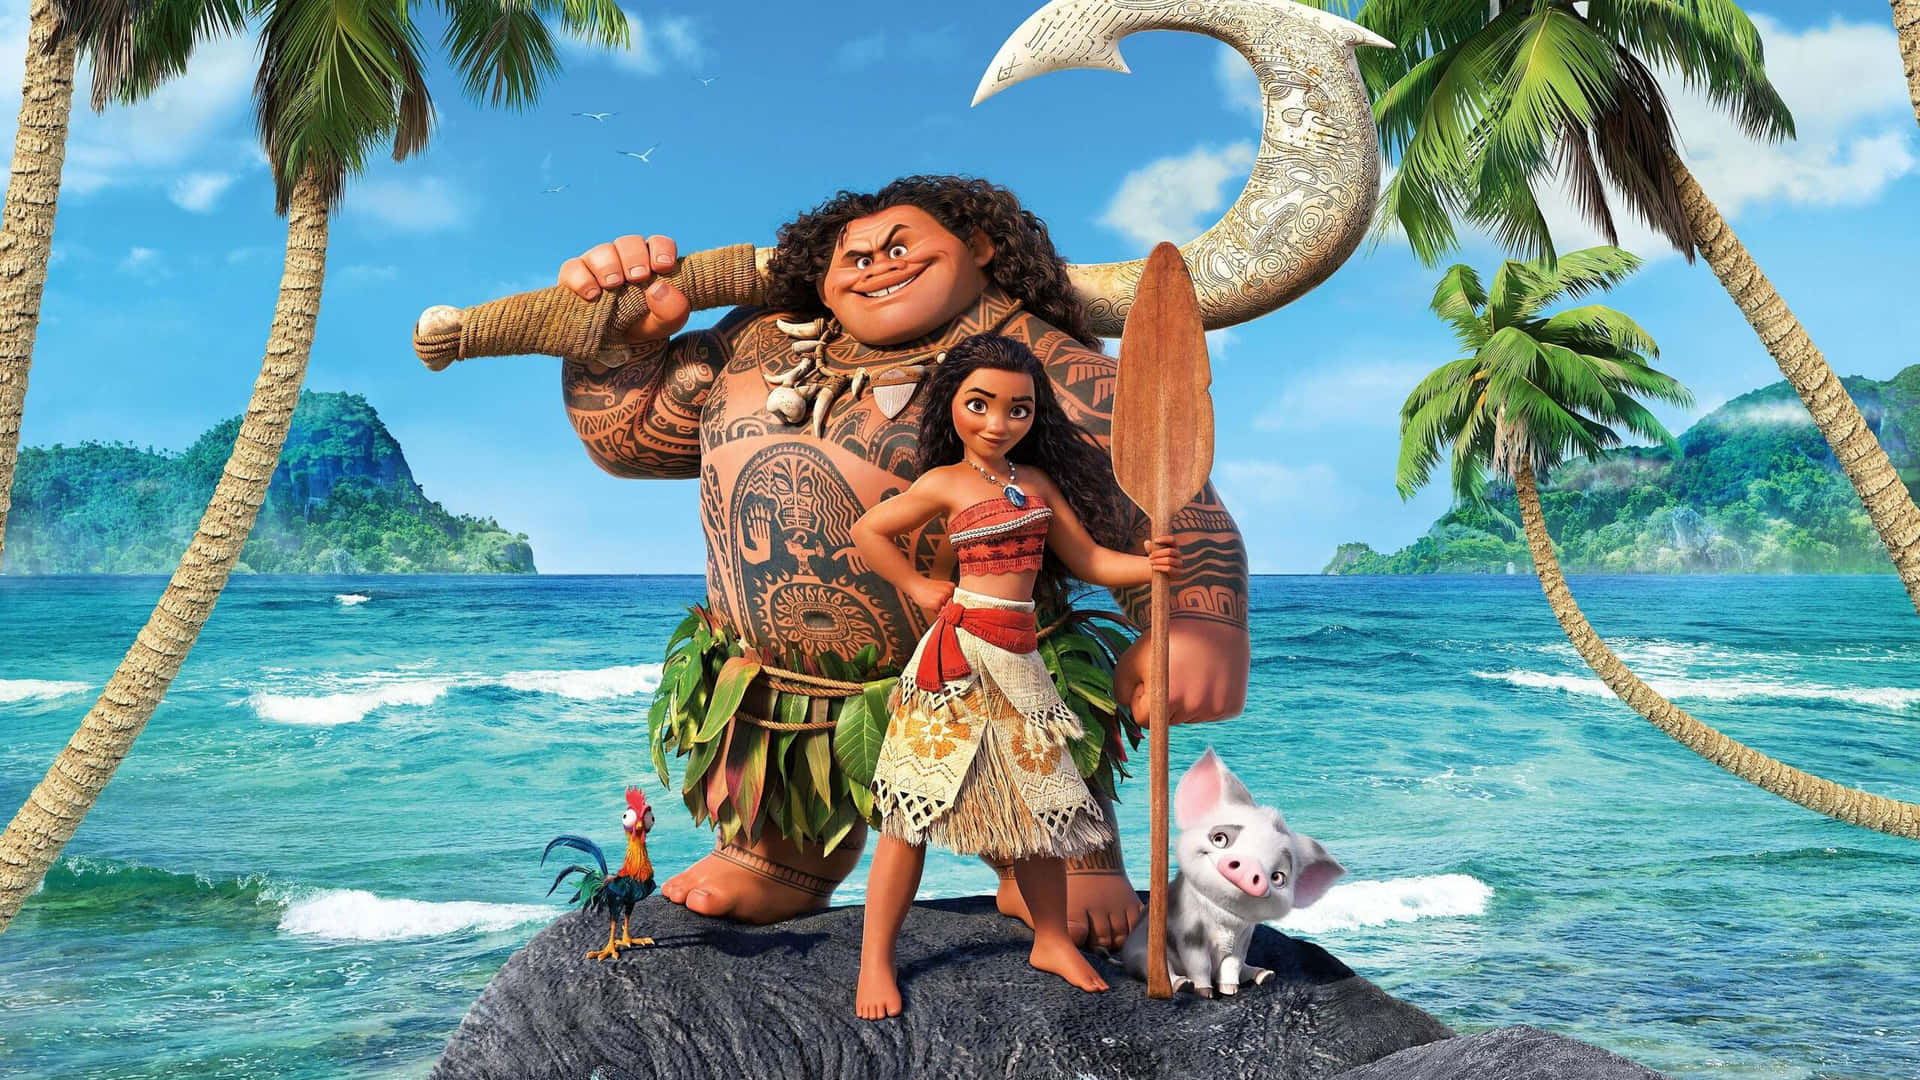 Moana Characters On Rock 1440p Disney Background